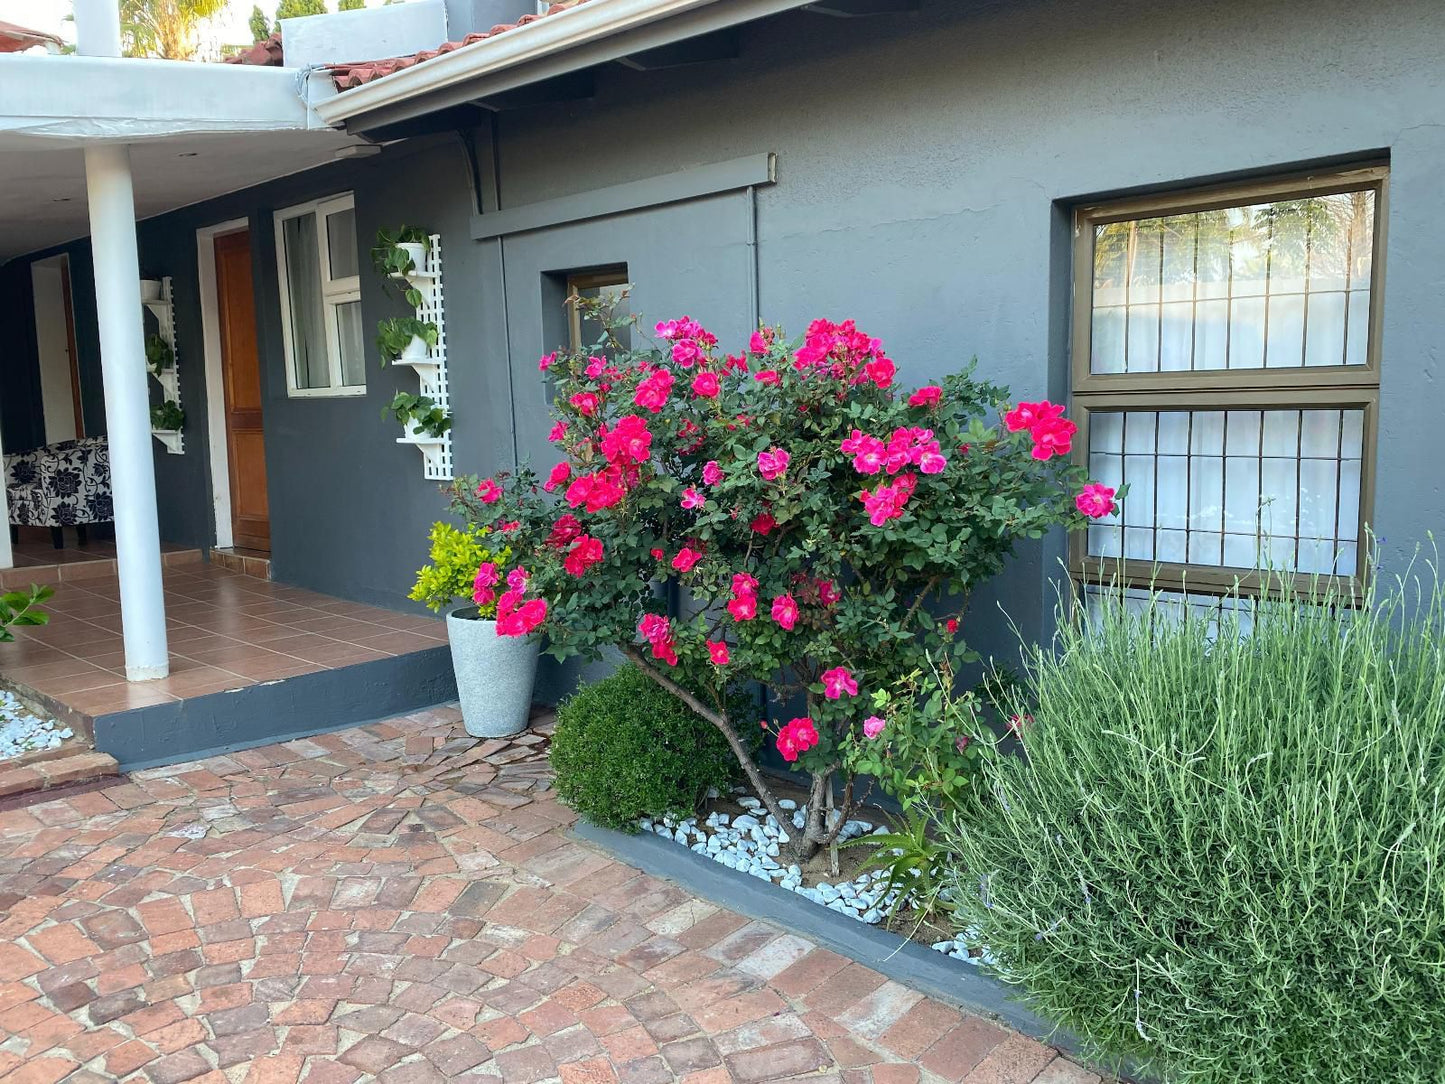 Marion Lodge Sandown Johannesburg Gauteng South Africa House, Building, Architecture, Plant, Nature, Garden